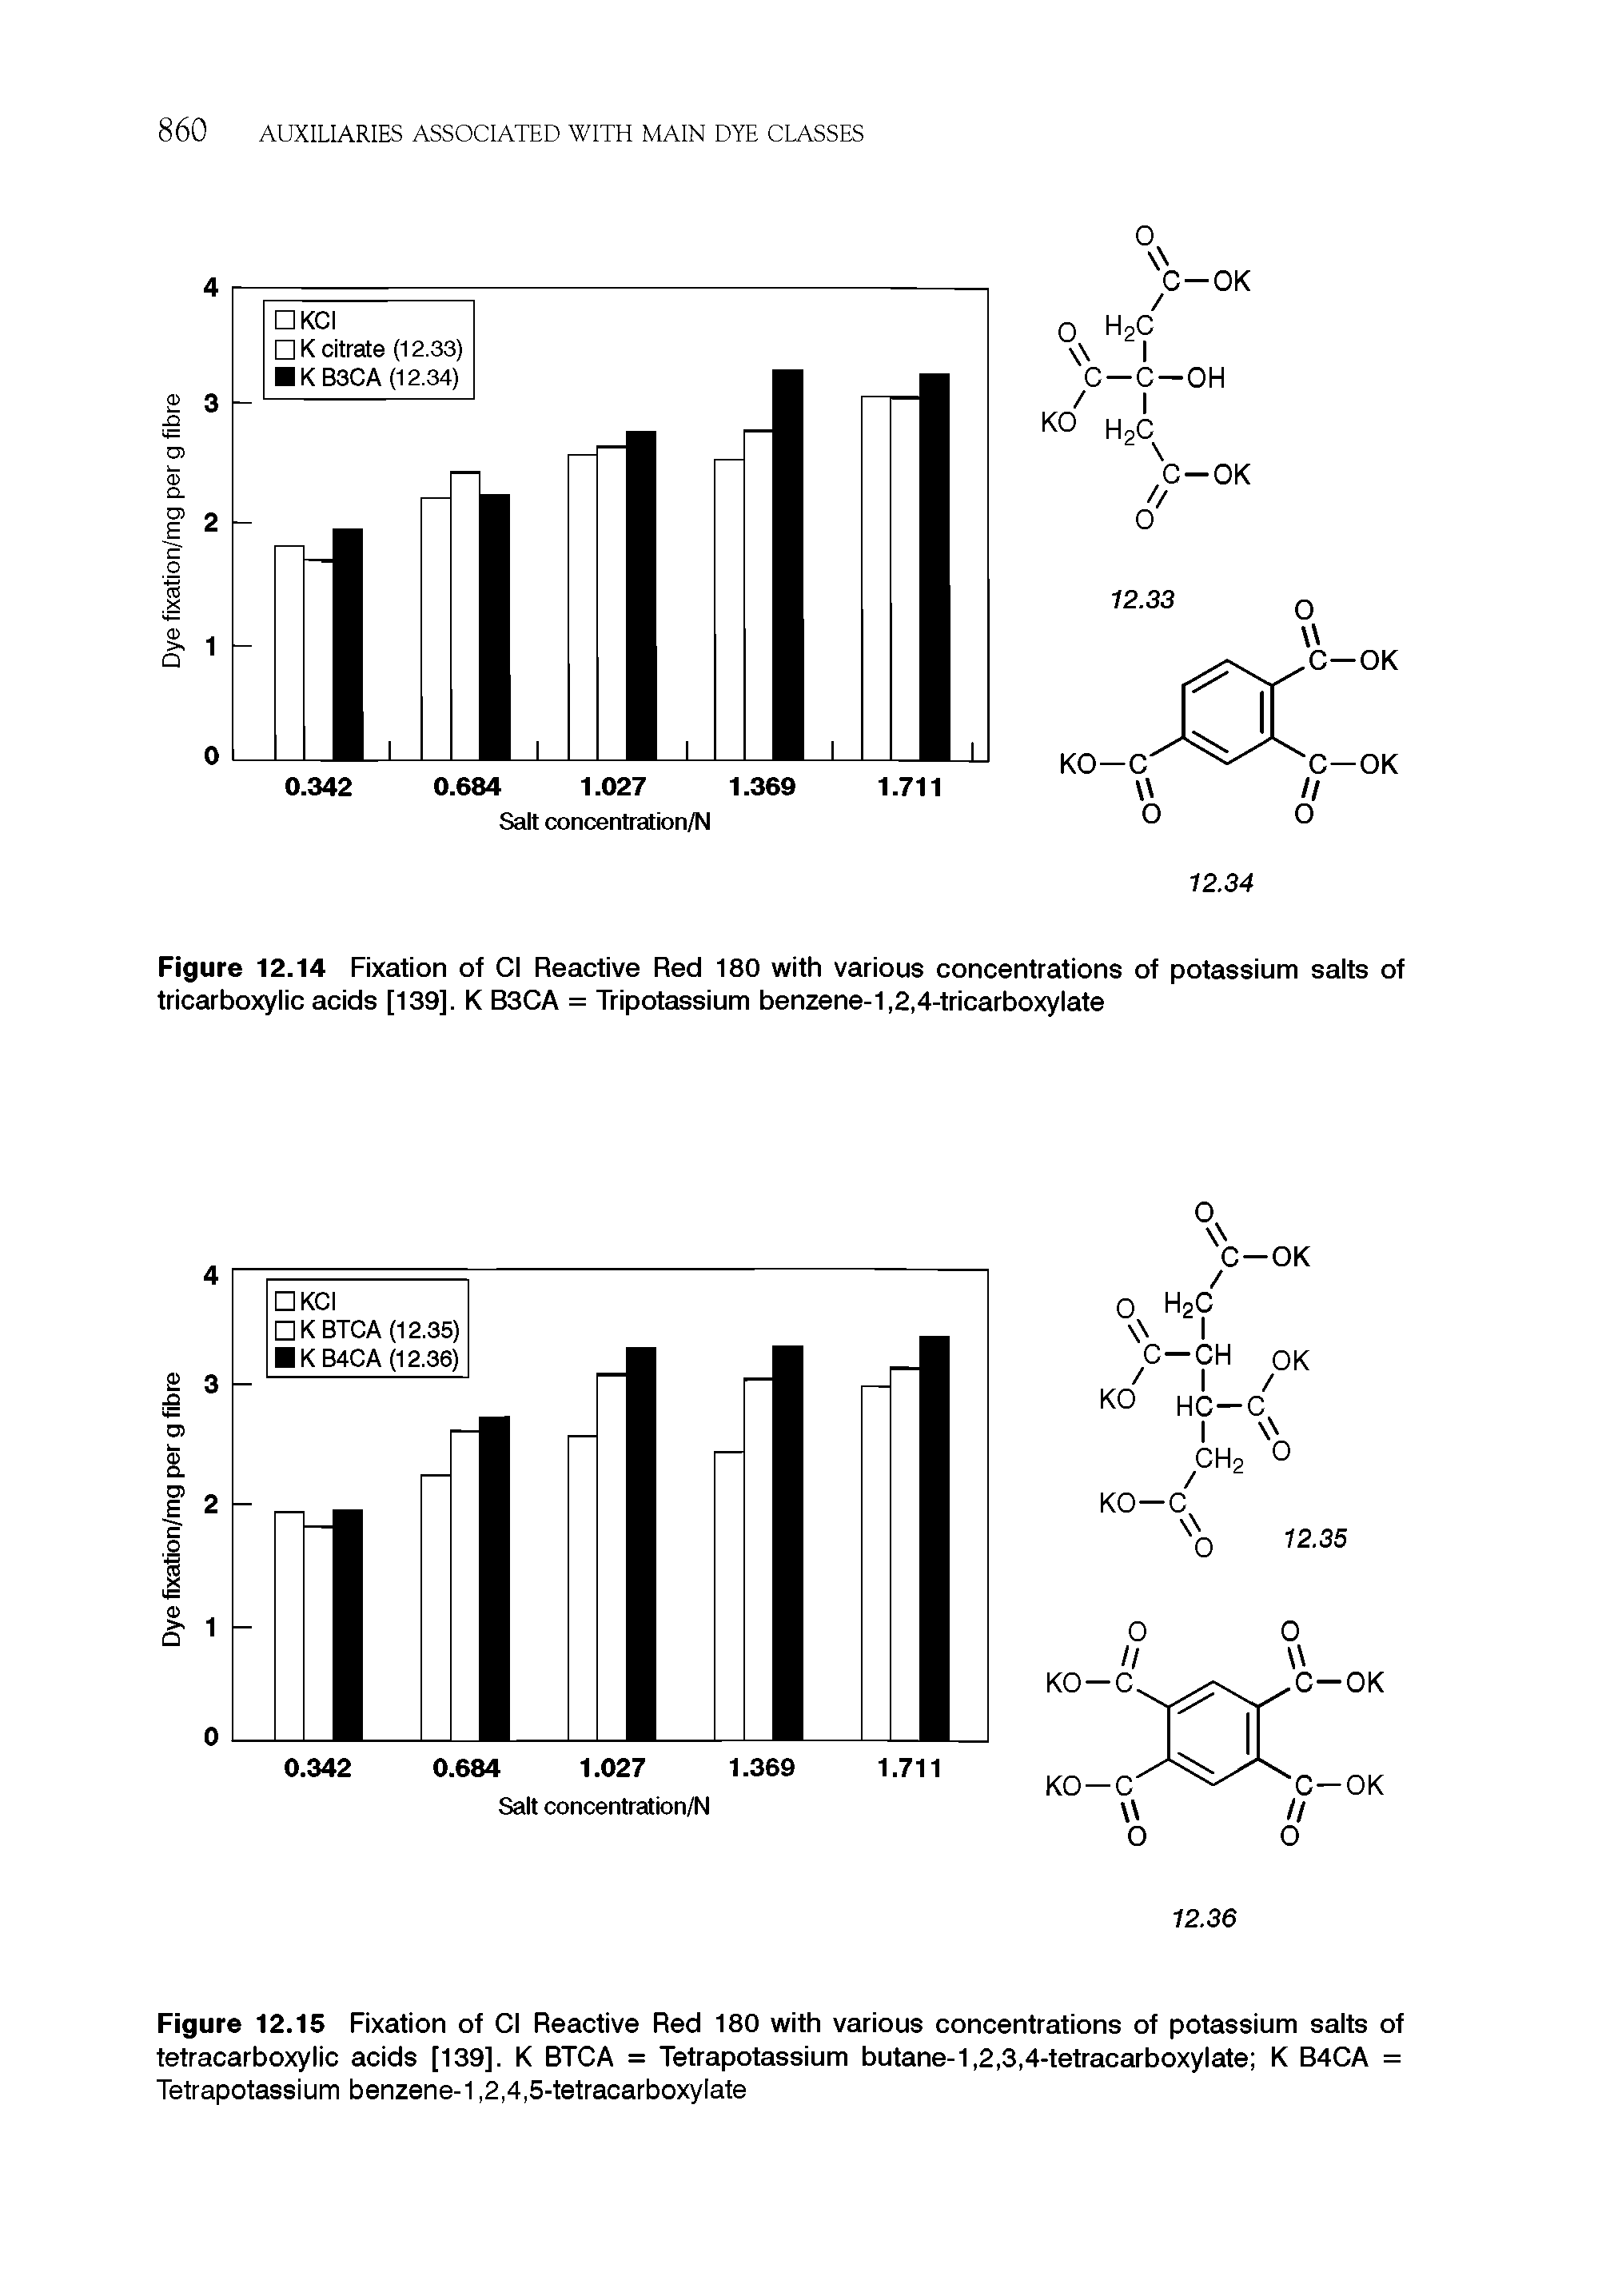 Figure 12.15 Fixation of Cl Reactive Red 180 with various concentrations of potassium salts of tetracarboxylic acids [139]. K BTCA = Tetrapotassium butane-1,2,3,4-tetracarboxylate K B4CA = Tetrapotassium benzene-1,2,4,5-tetracarboxylate...